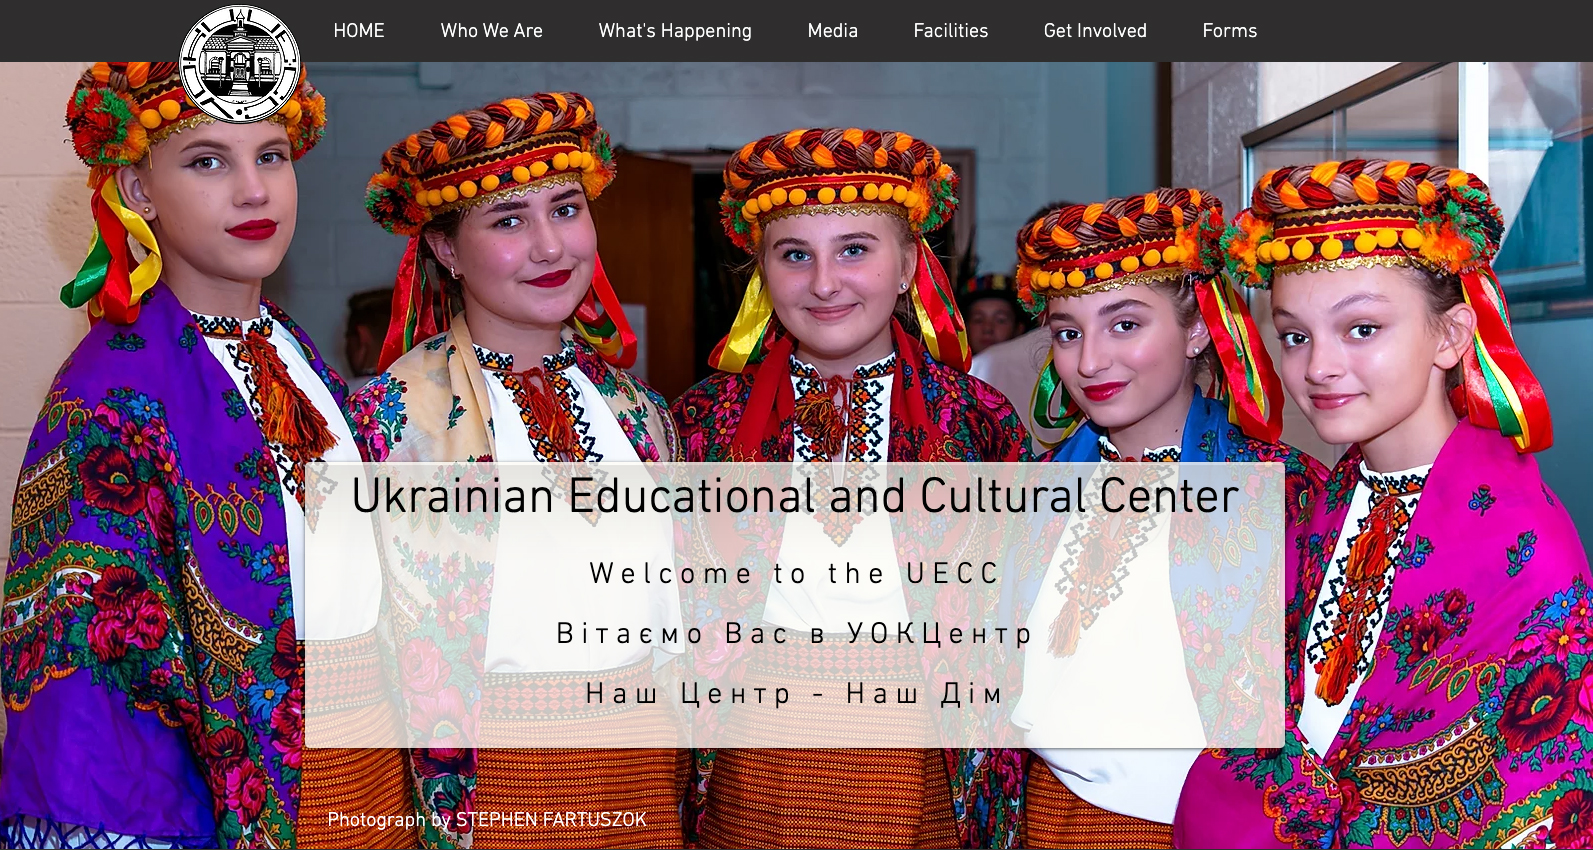 Sophia Zalipsky With the Ukrainian Educational & Cultural Center (UECC) in Philadelphia